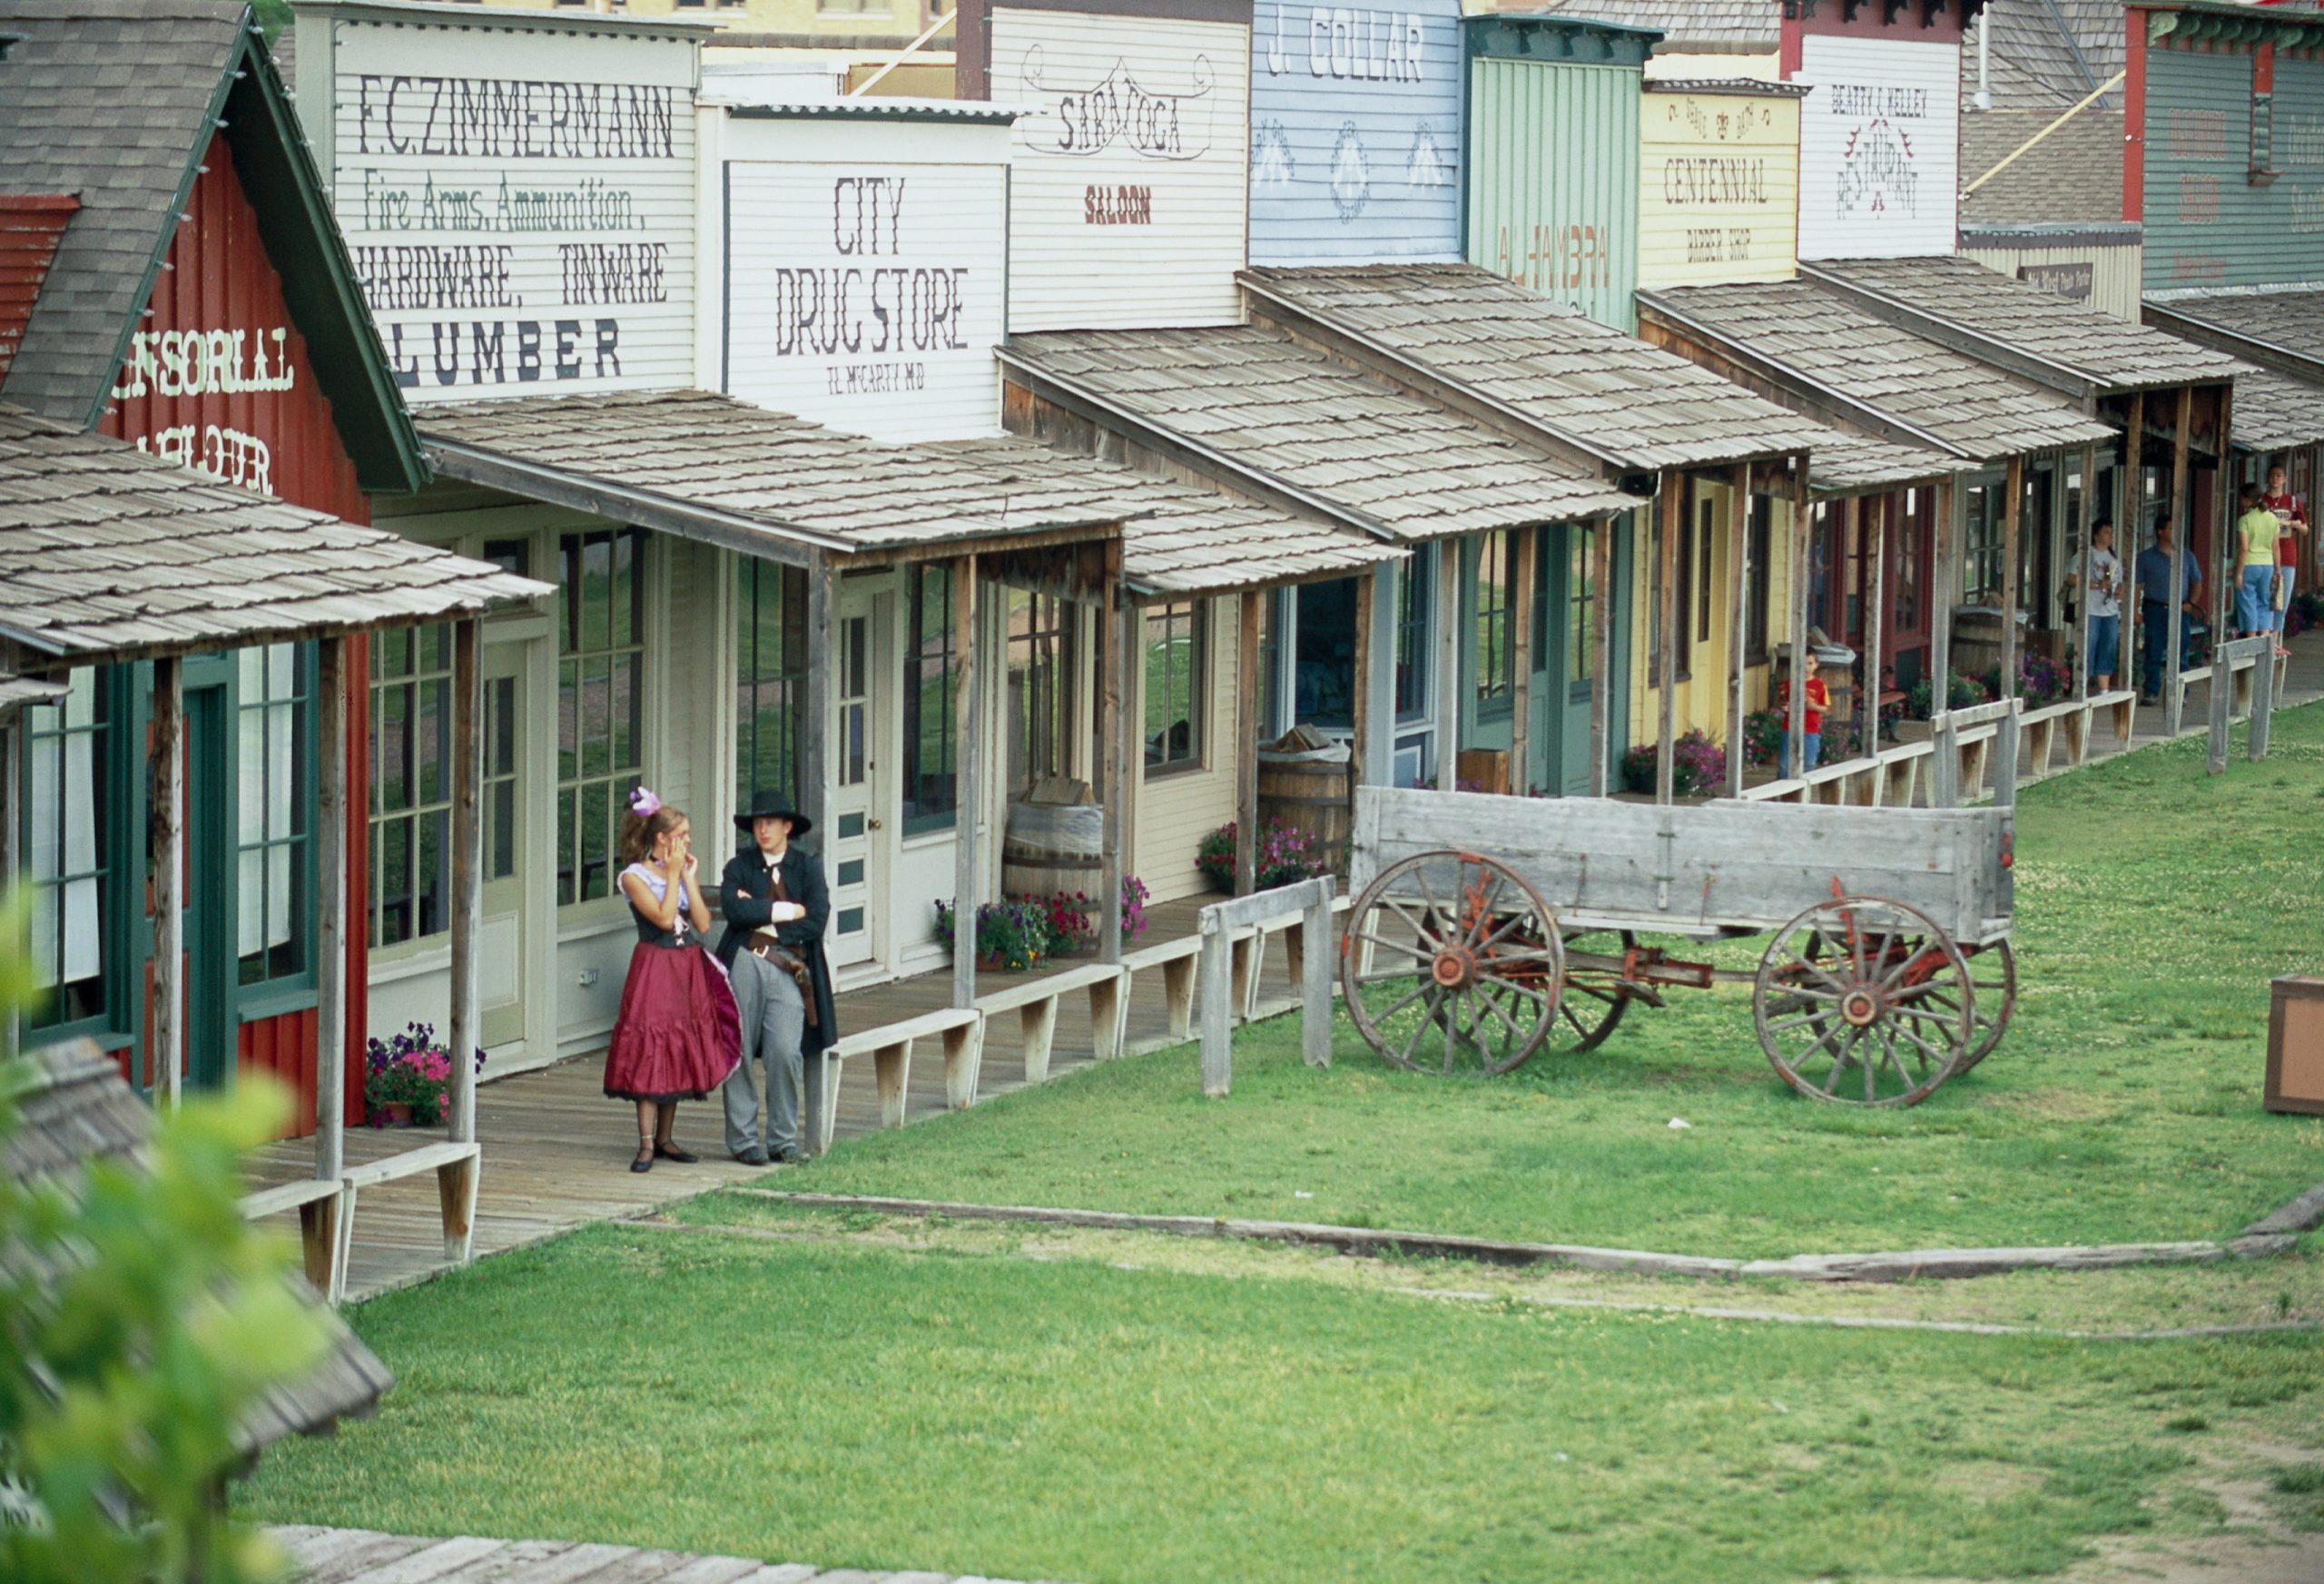 Dodge City still provides glimpse of Old West